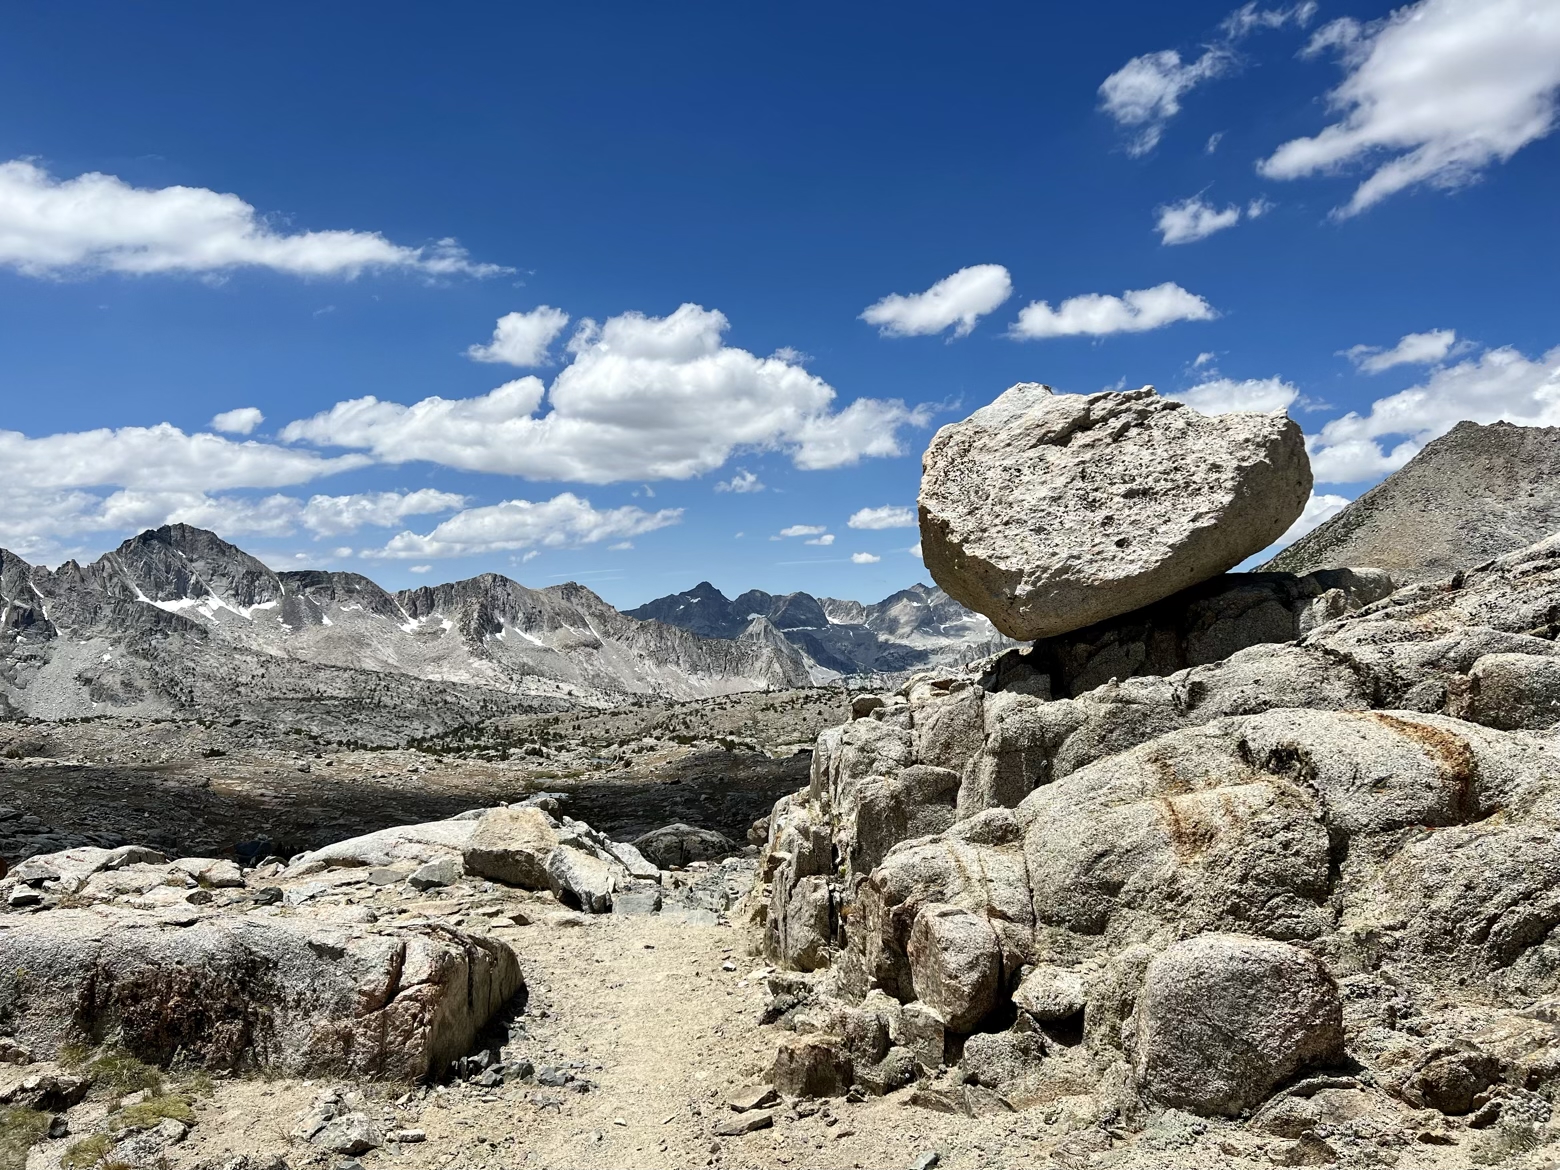 Teetering boulder beneath a blue sky in Dusy Basin